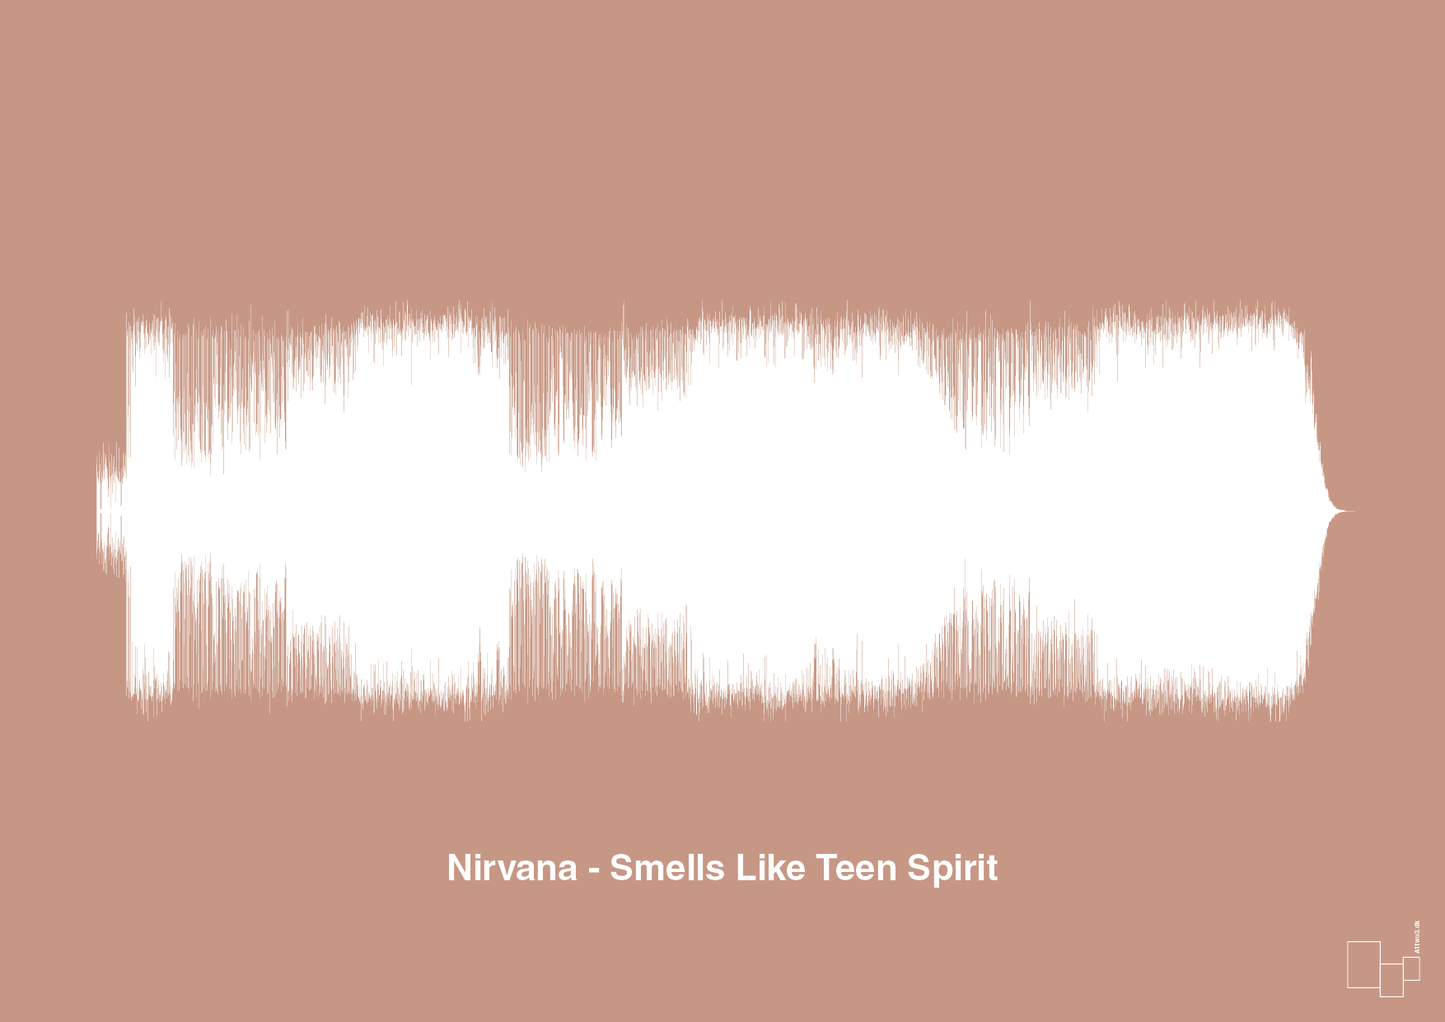 nirvana - smells like teen spirit - Plakat med Musik i Powder